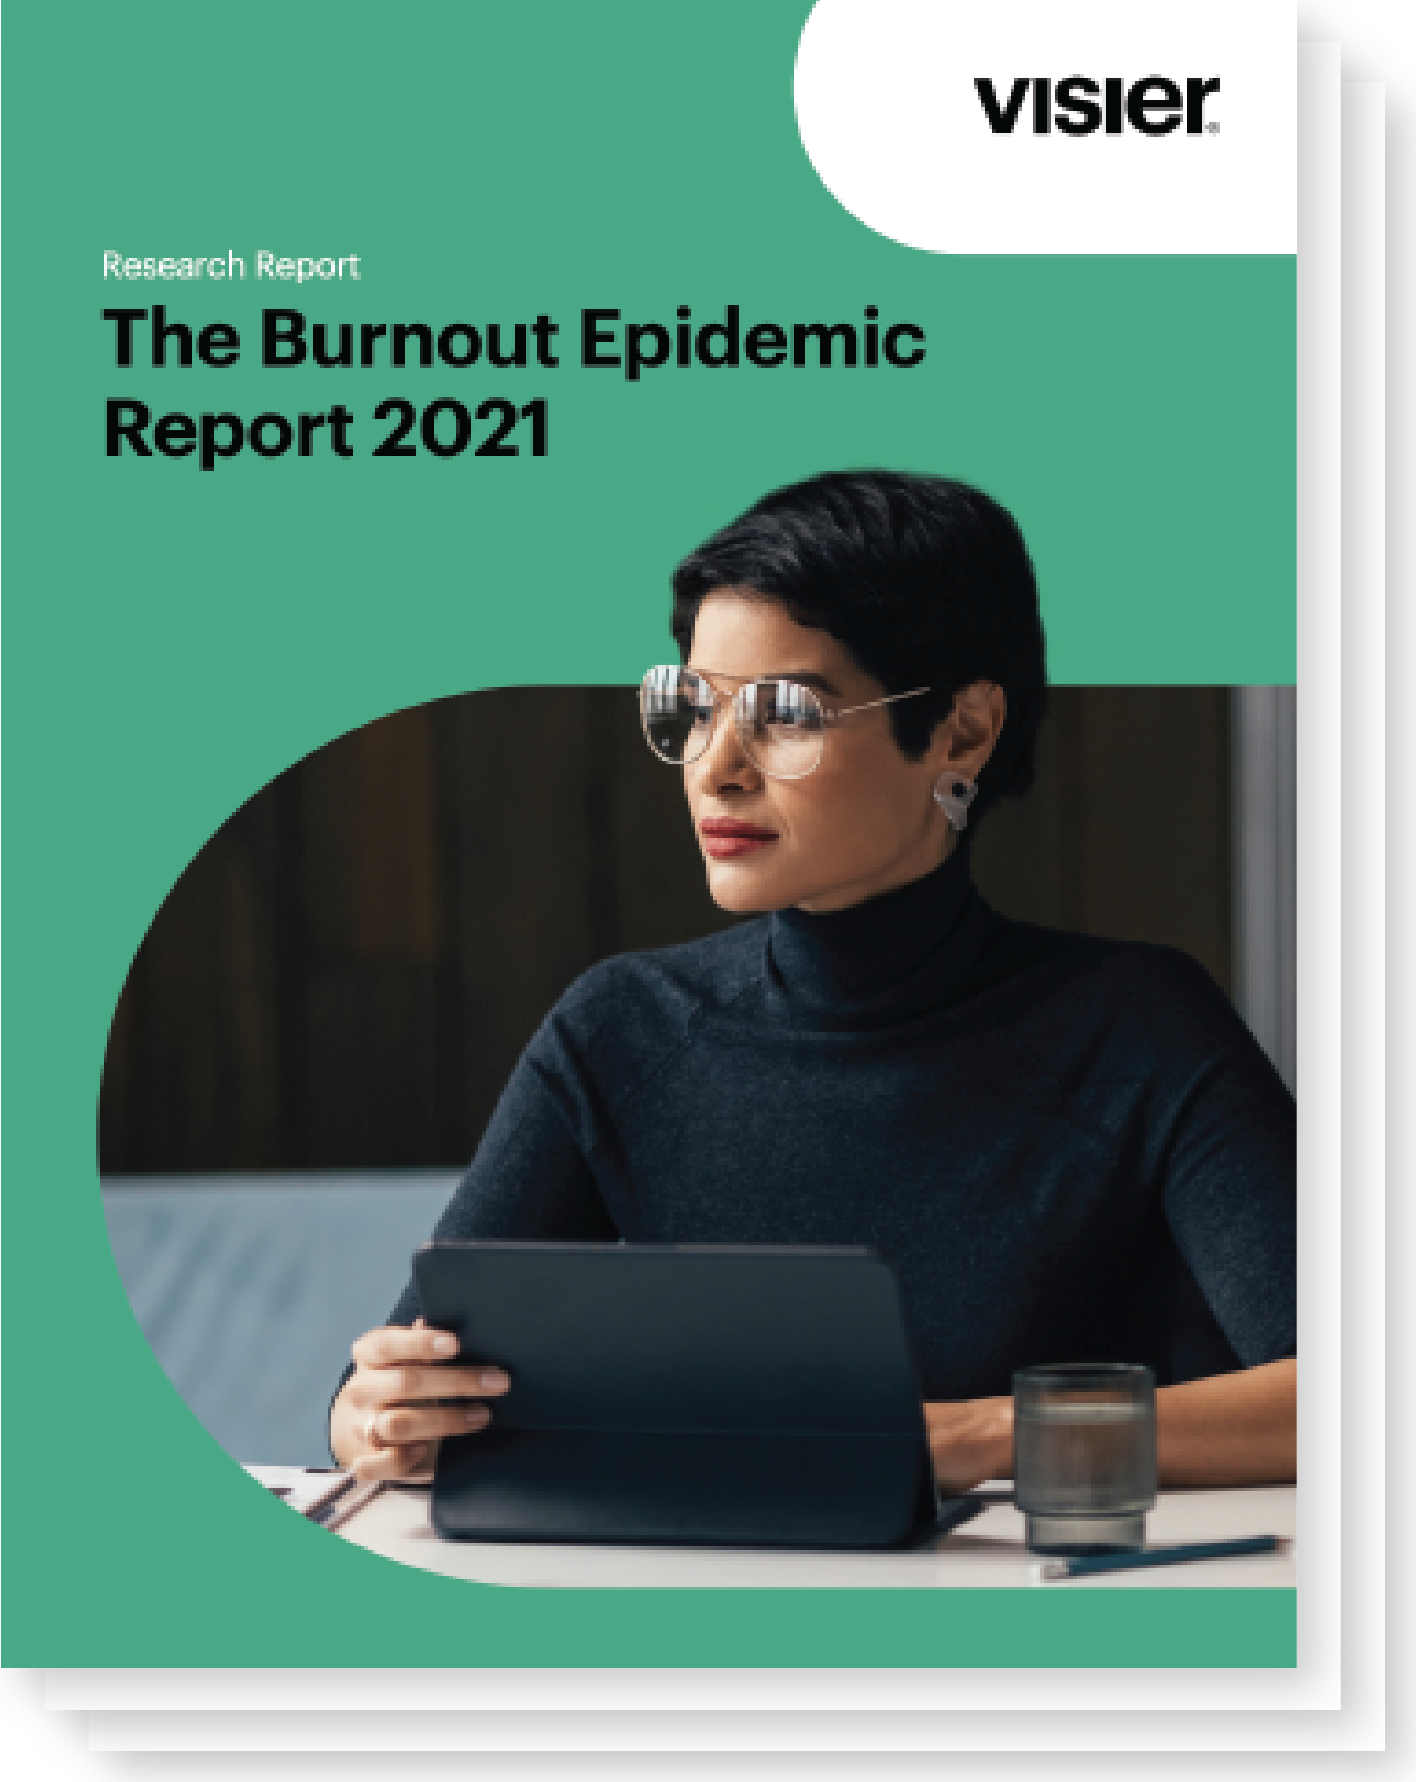 The Burnout Epidemic Report